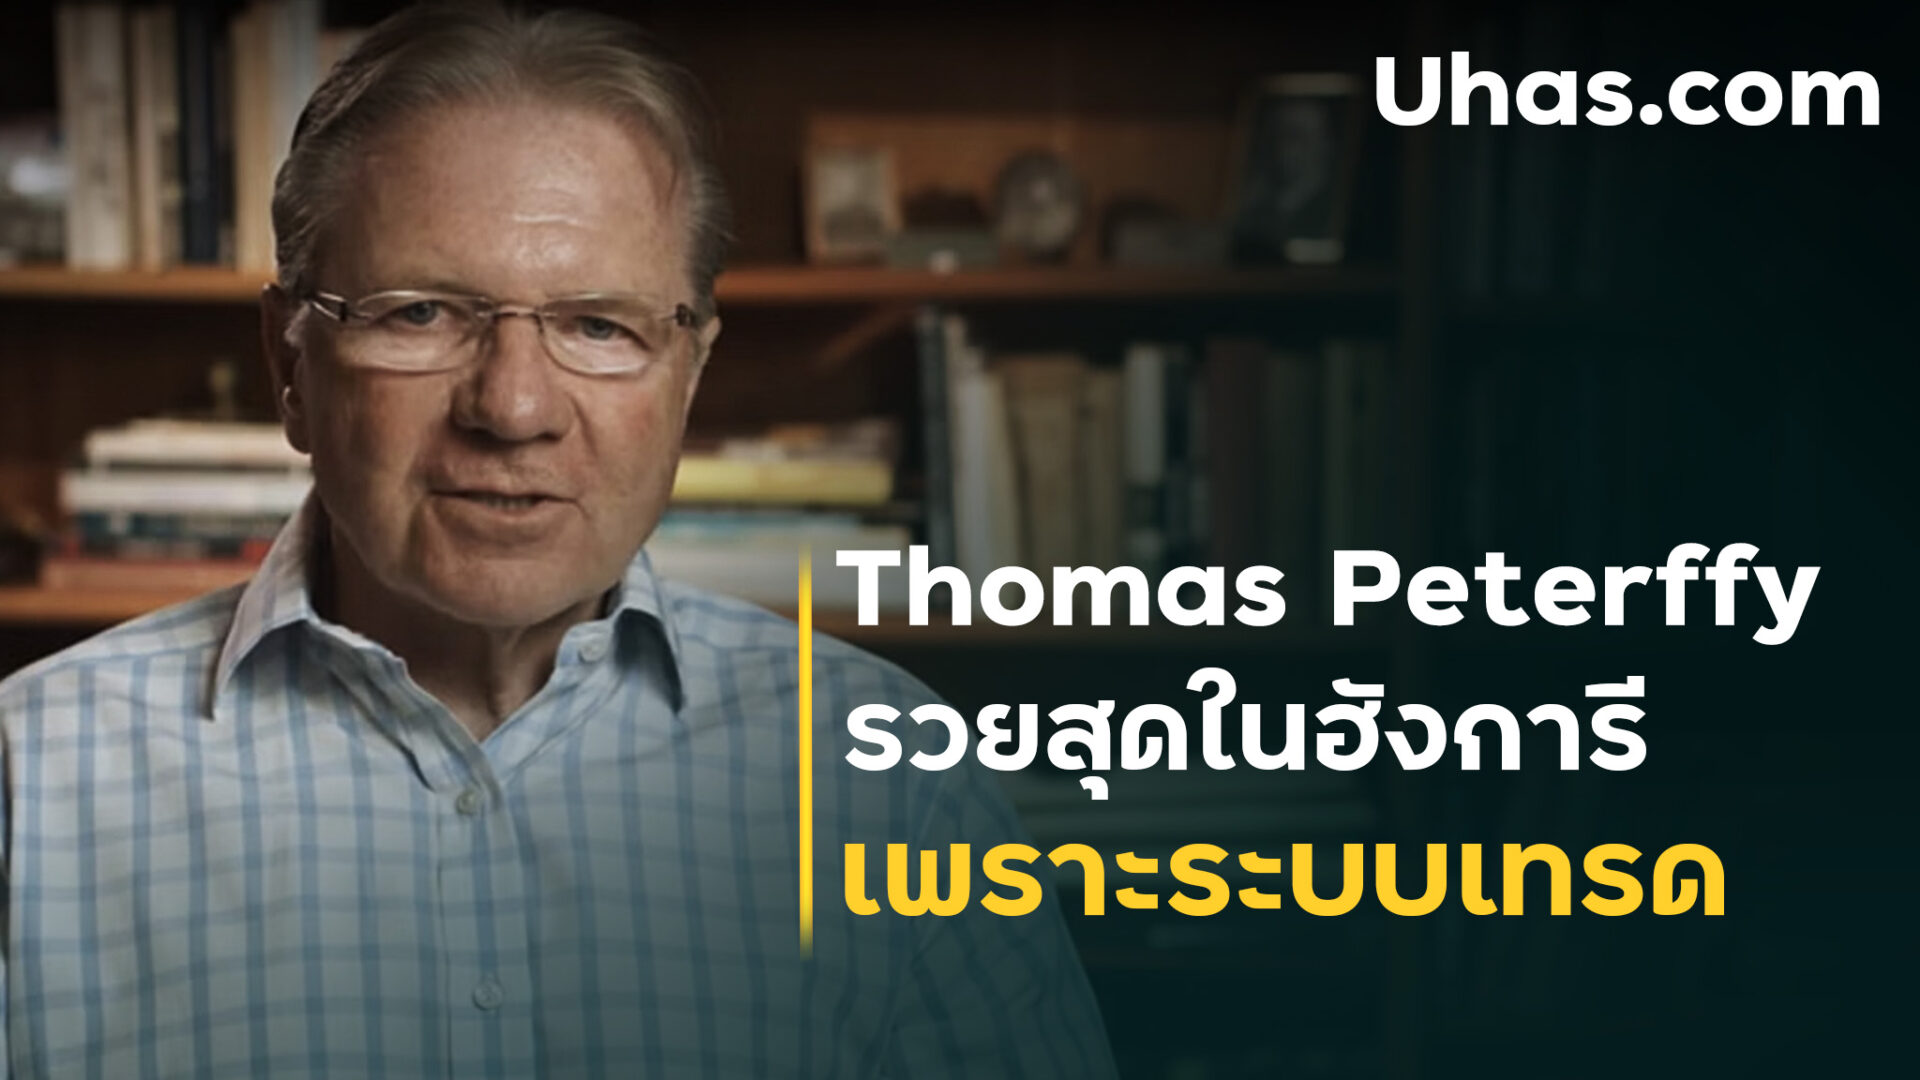 Thomas Peterffy